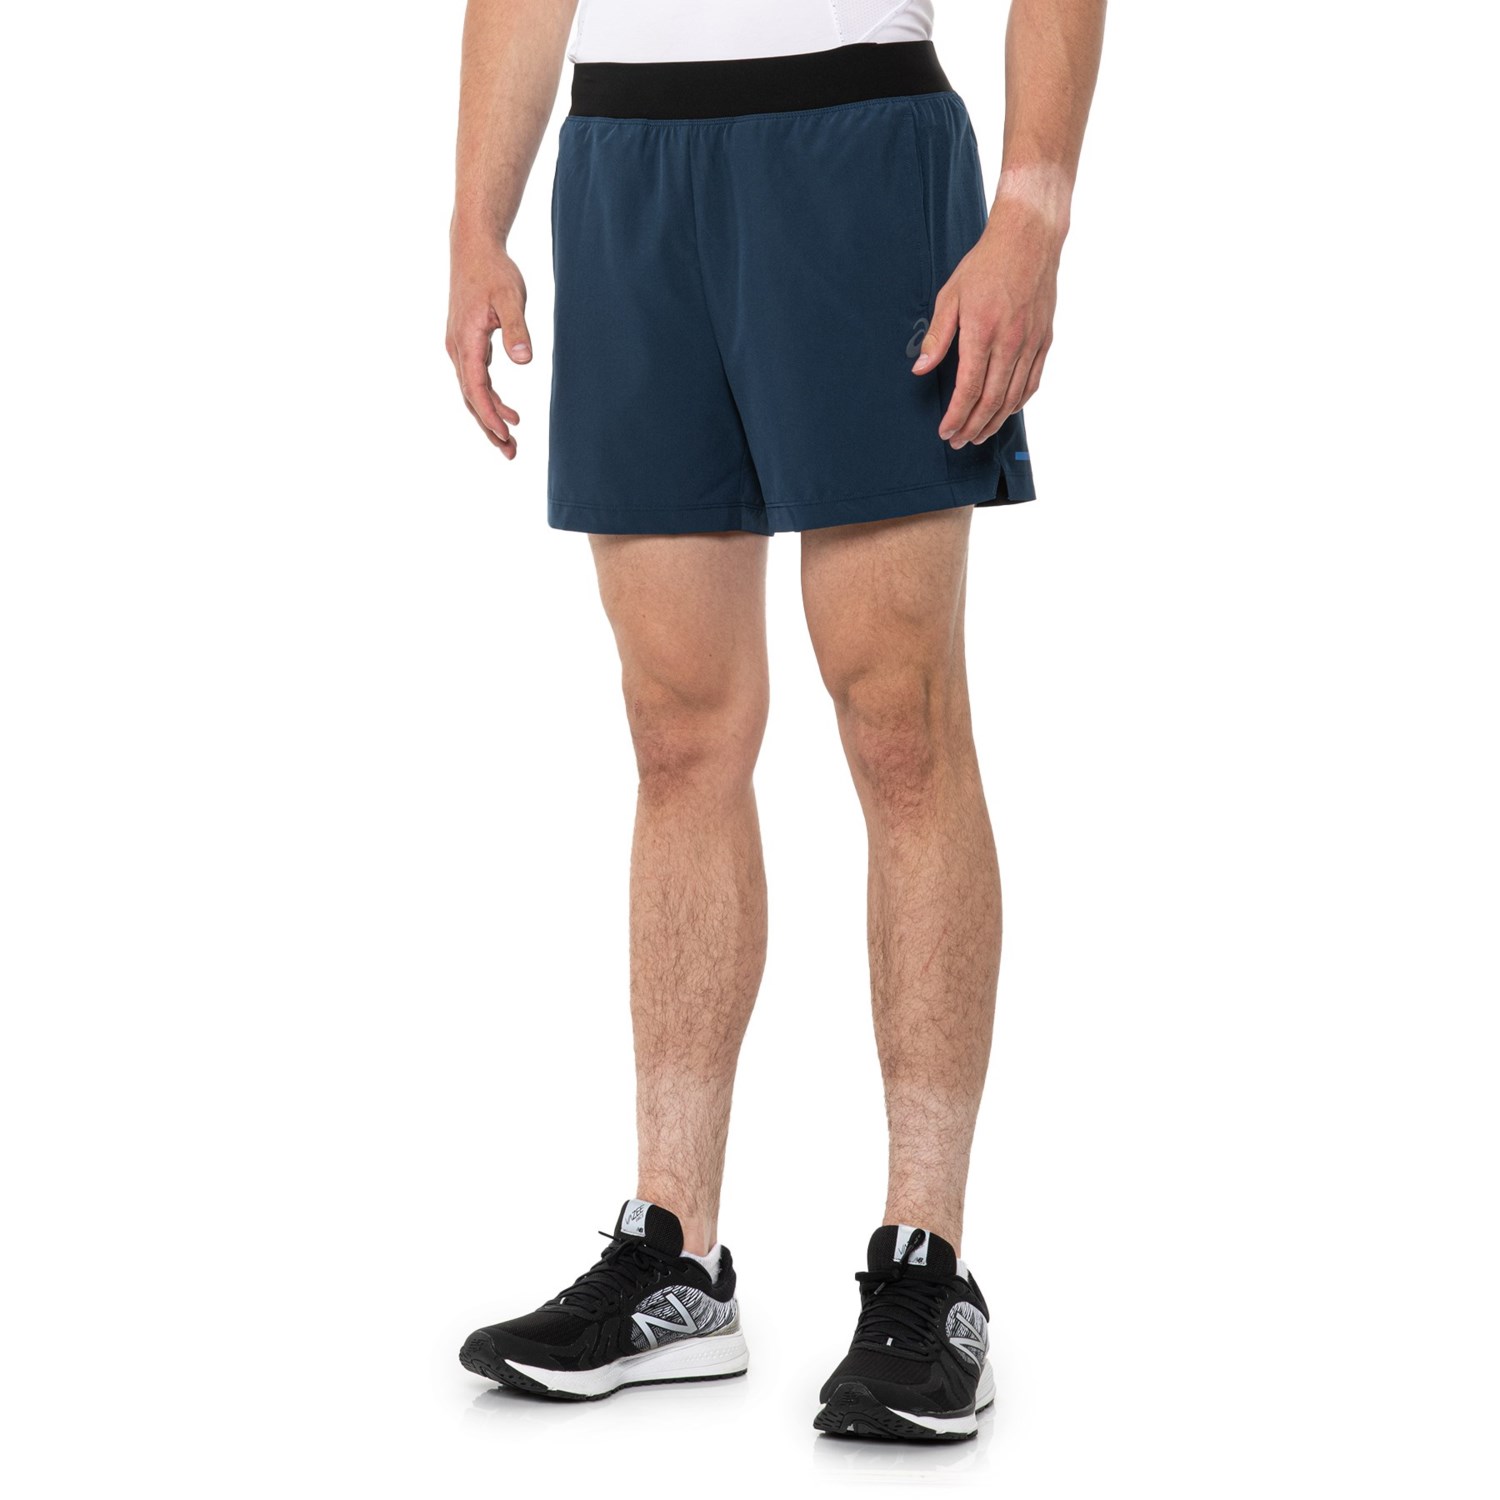 ASICS Woven Running Shorts (For Men) - Save 39%